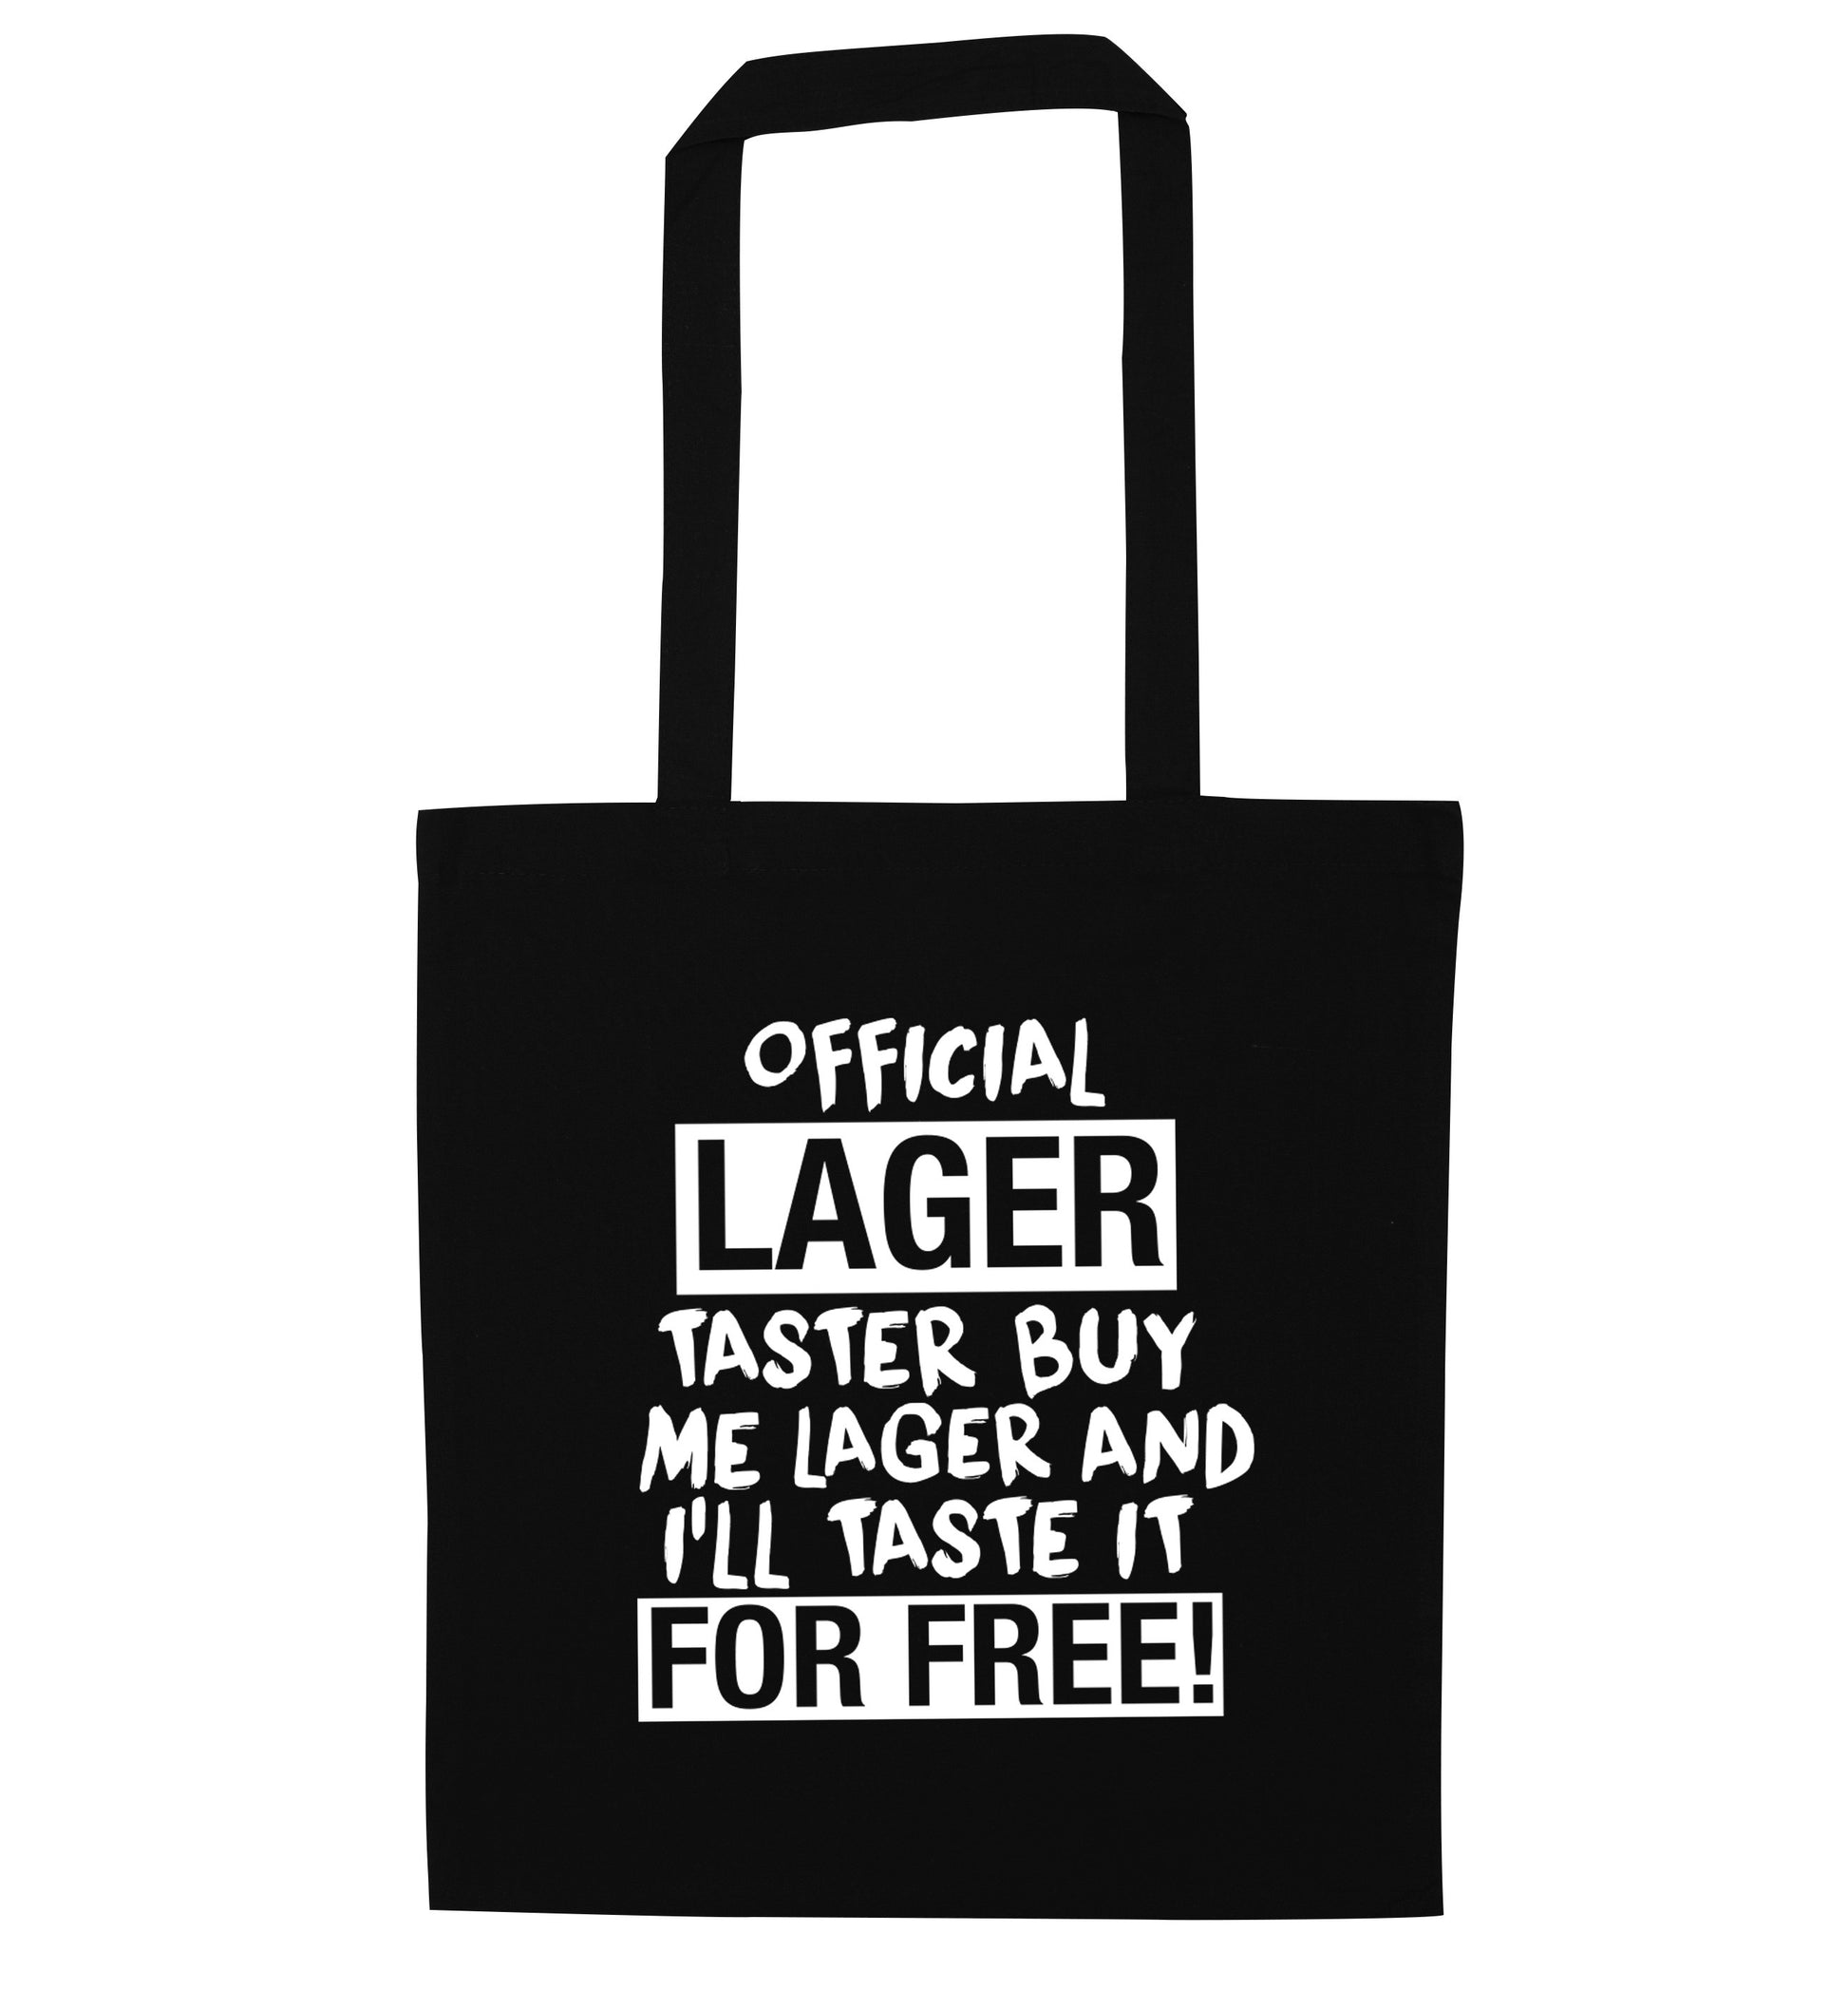 Official lager taster buy me lager and I'll taste it for free! black tote bag